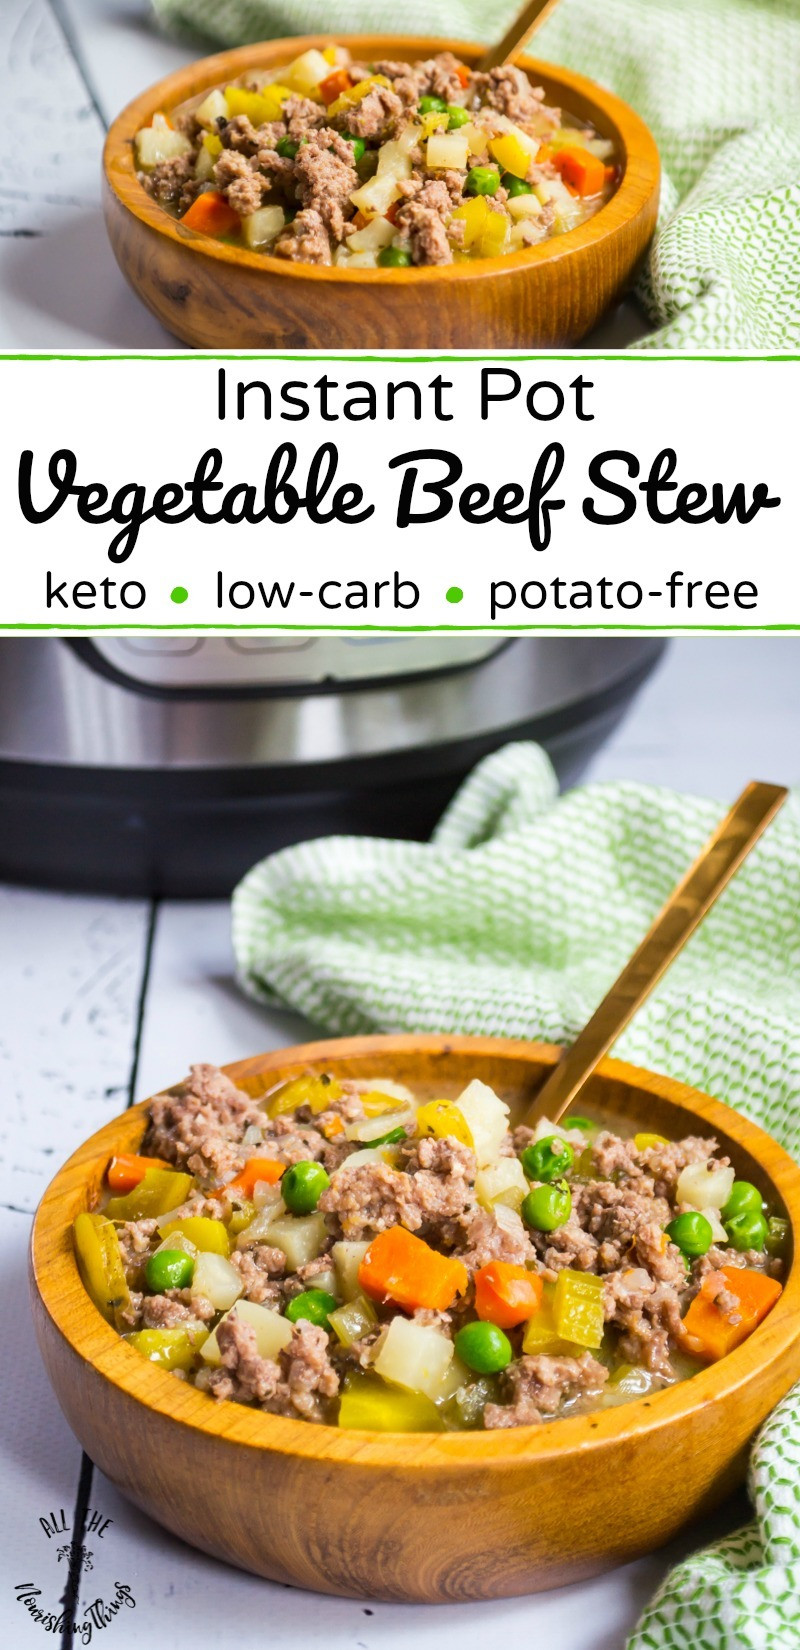 Instapot Keto Stew
 Instant Pot Ve able Beef Stew keto Whole30 potato free